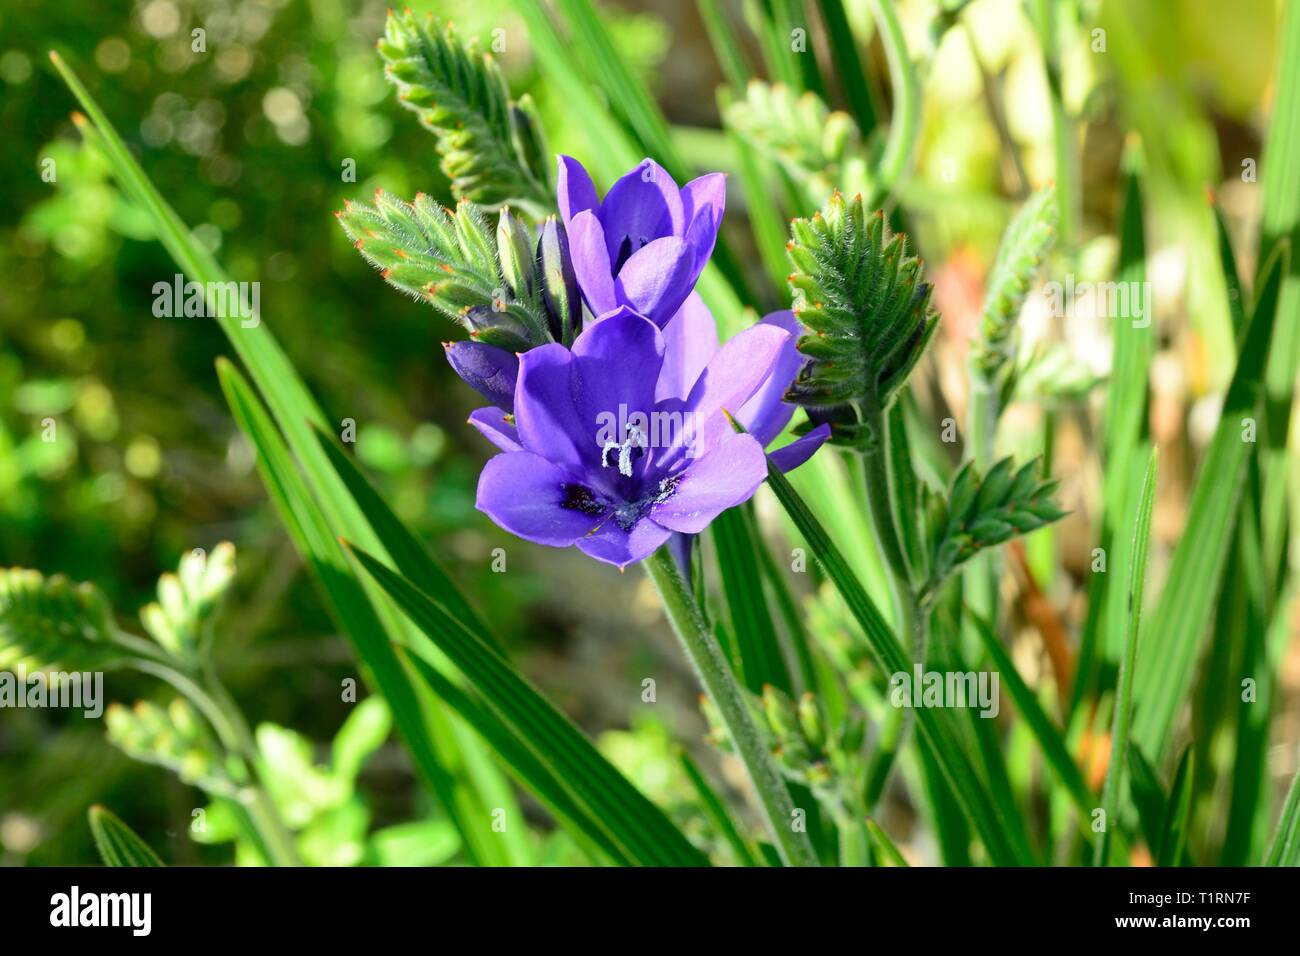 Babiana stricta blue freesia flowers Stock Photo